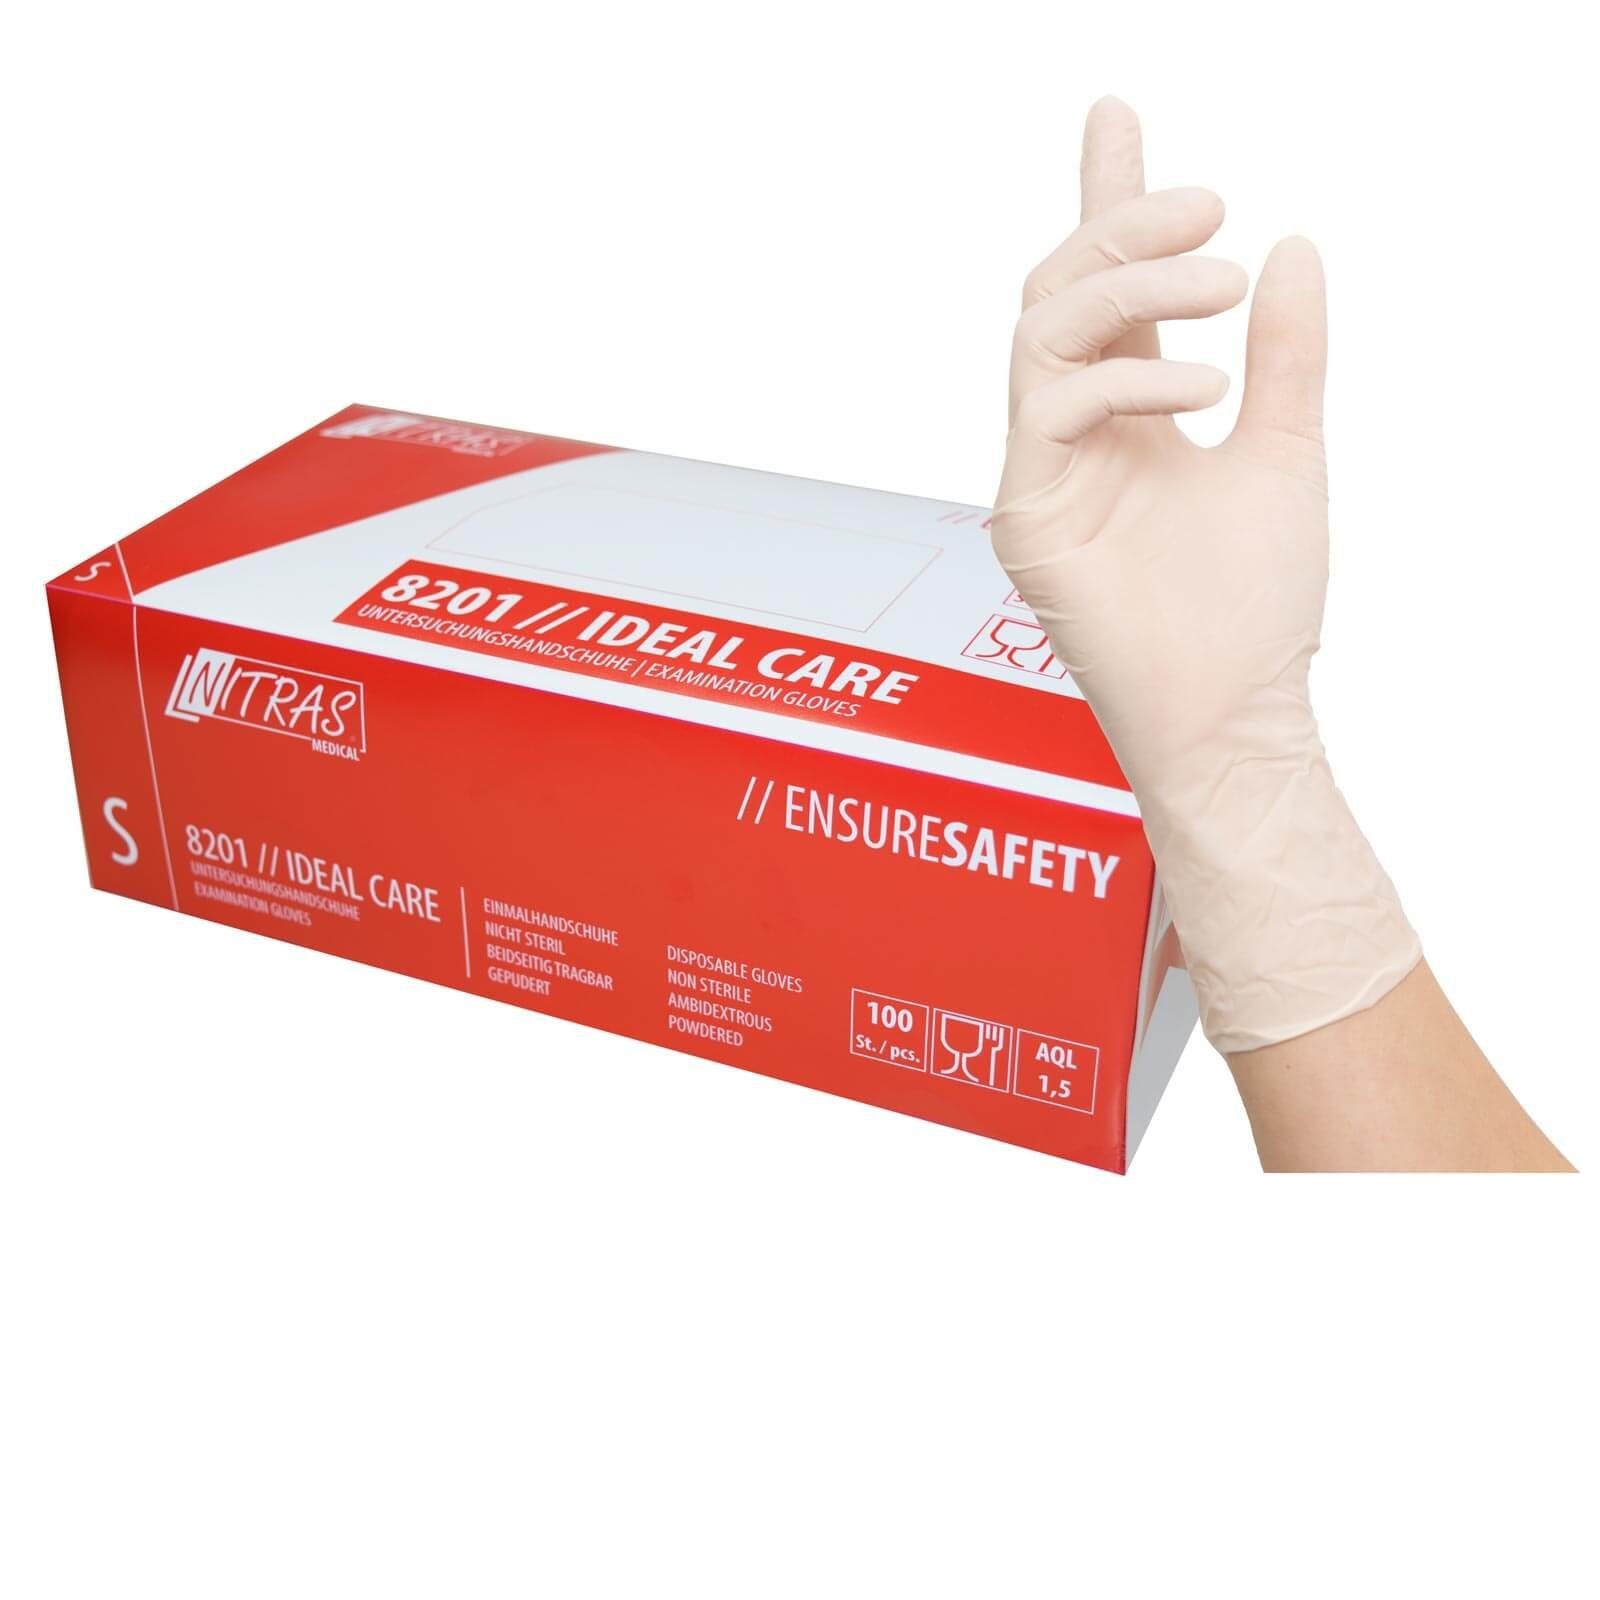 Einweghandschuhe Nitras Stück Care Latex Einmalhandschuhe, Medical 100 (Spar-Set) 8201 Handschuhe, Ideal NITRAS